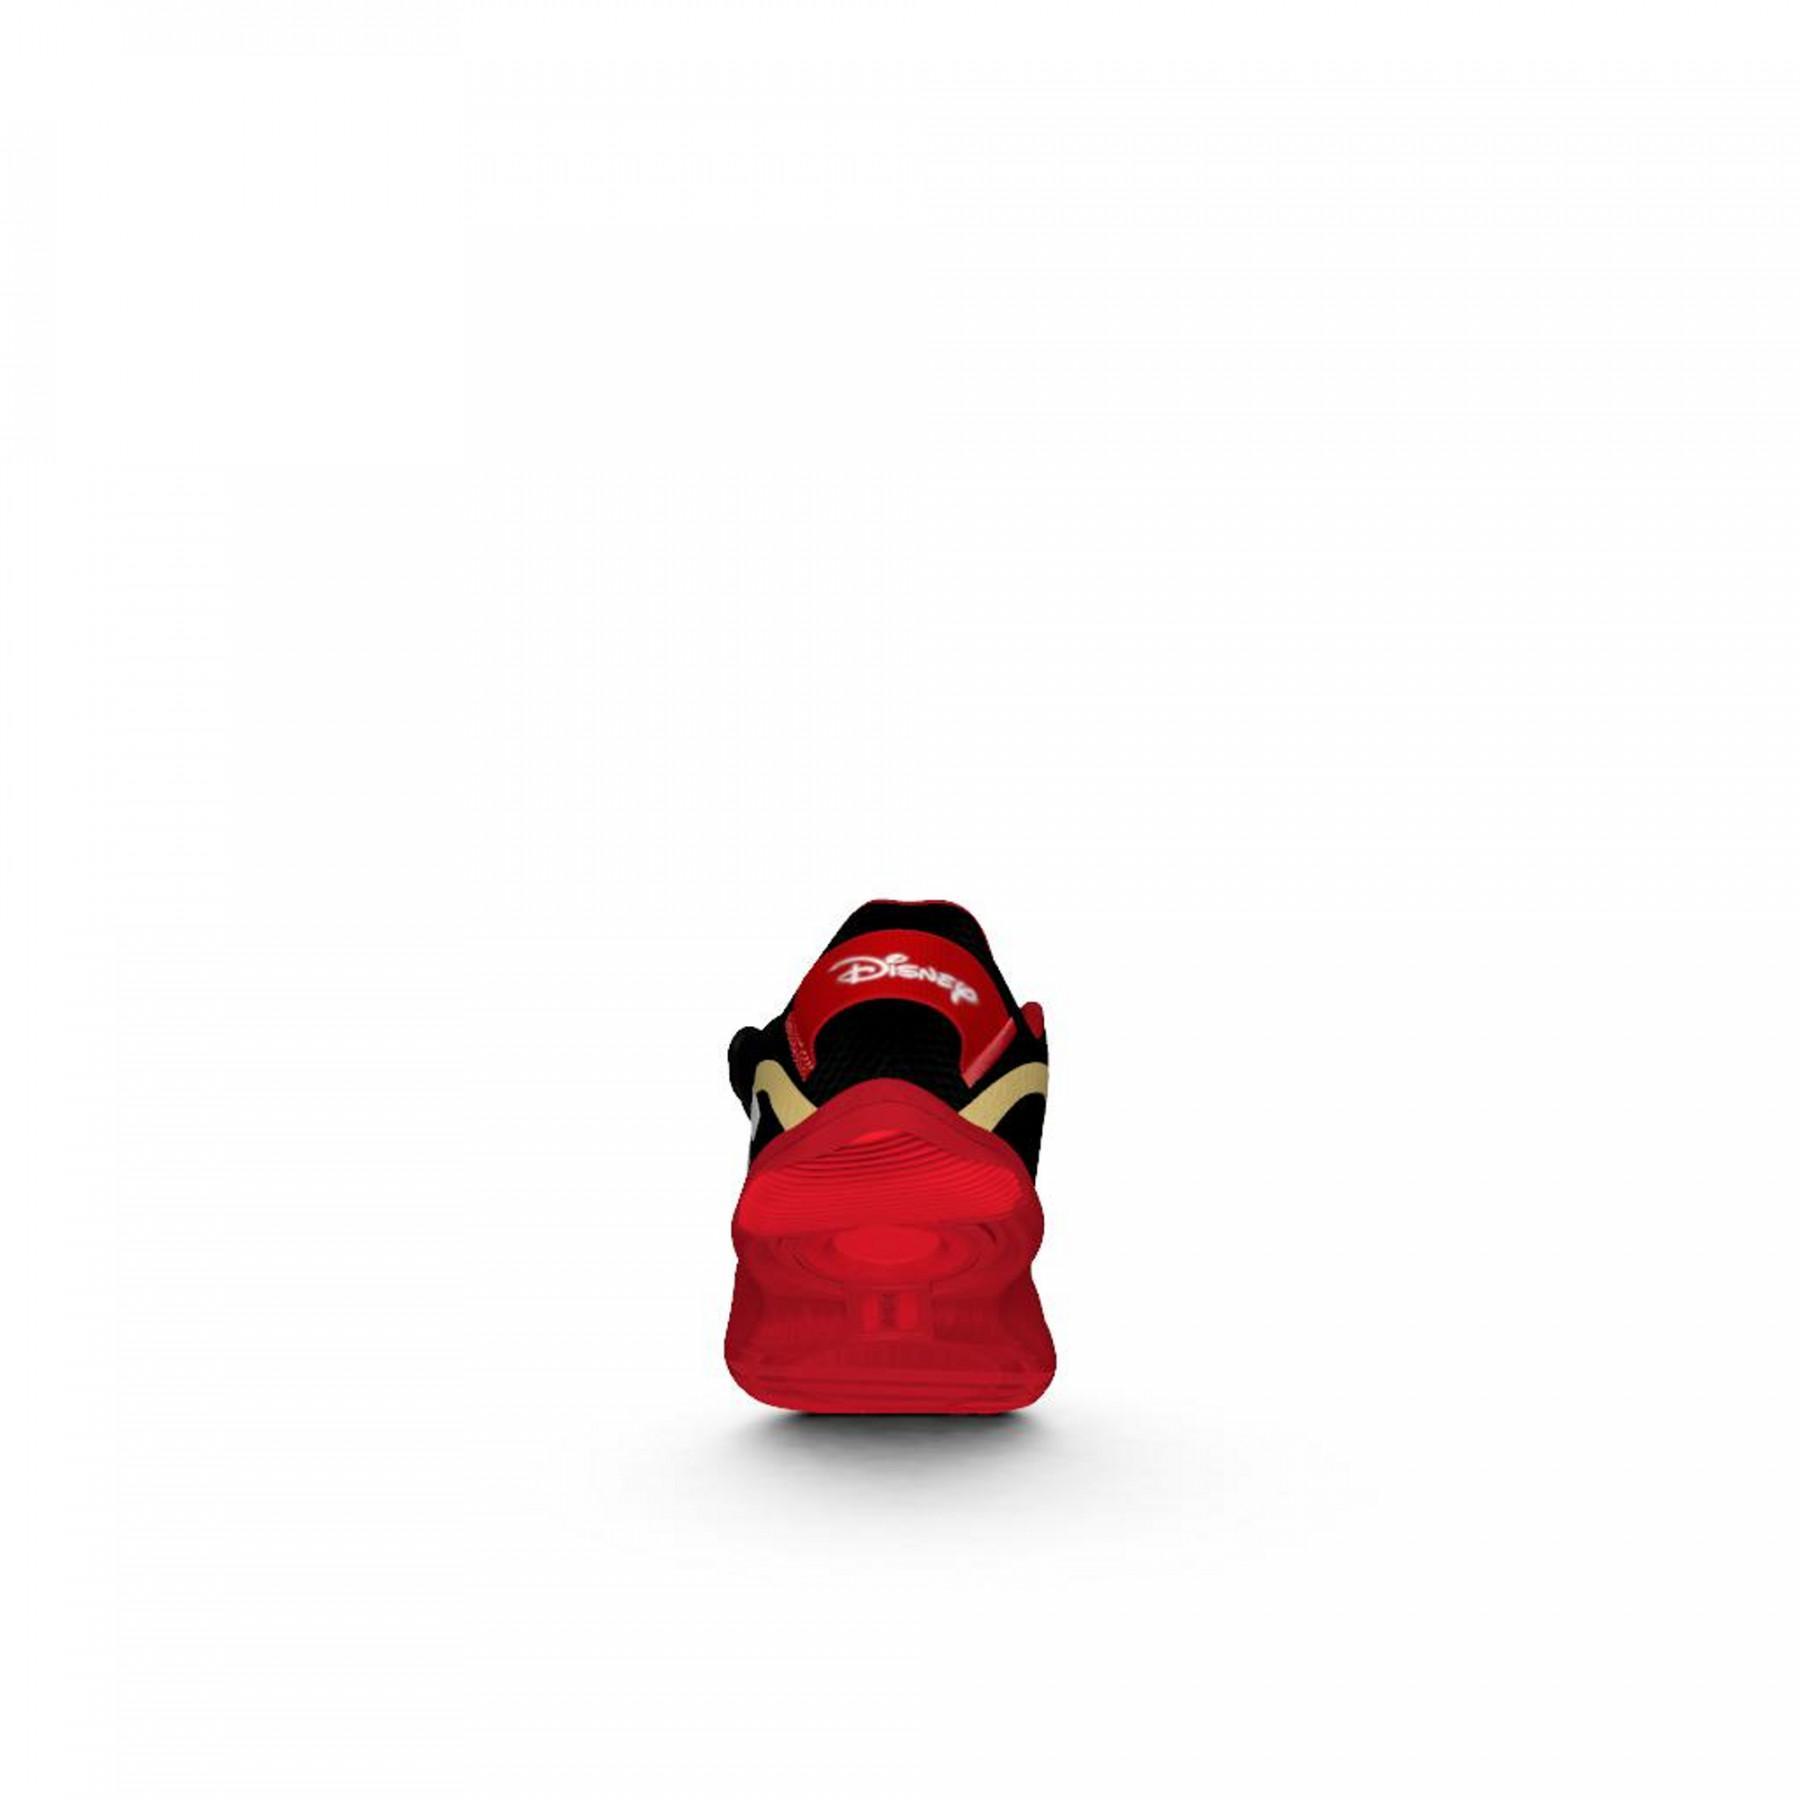 Scarpe per bambini adidas ActivePlay Mickey